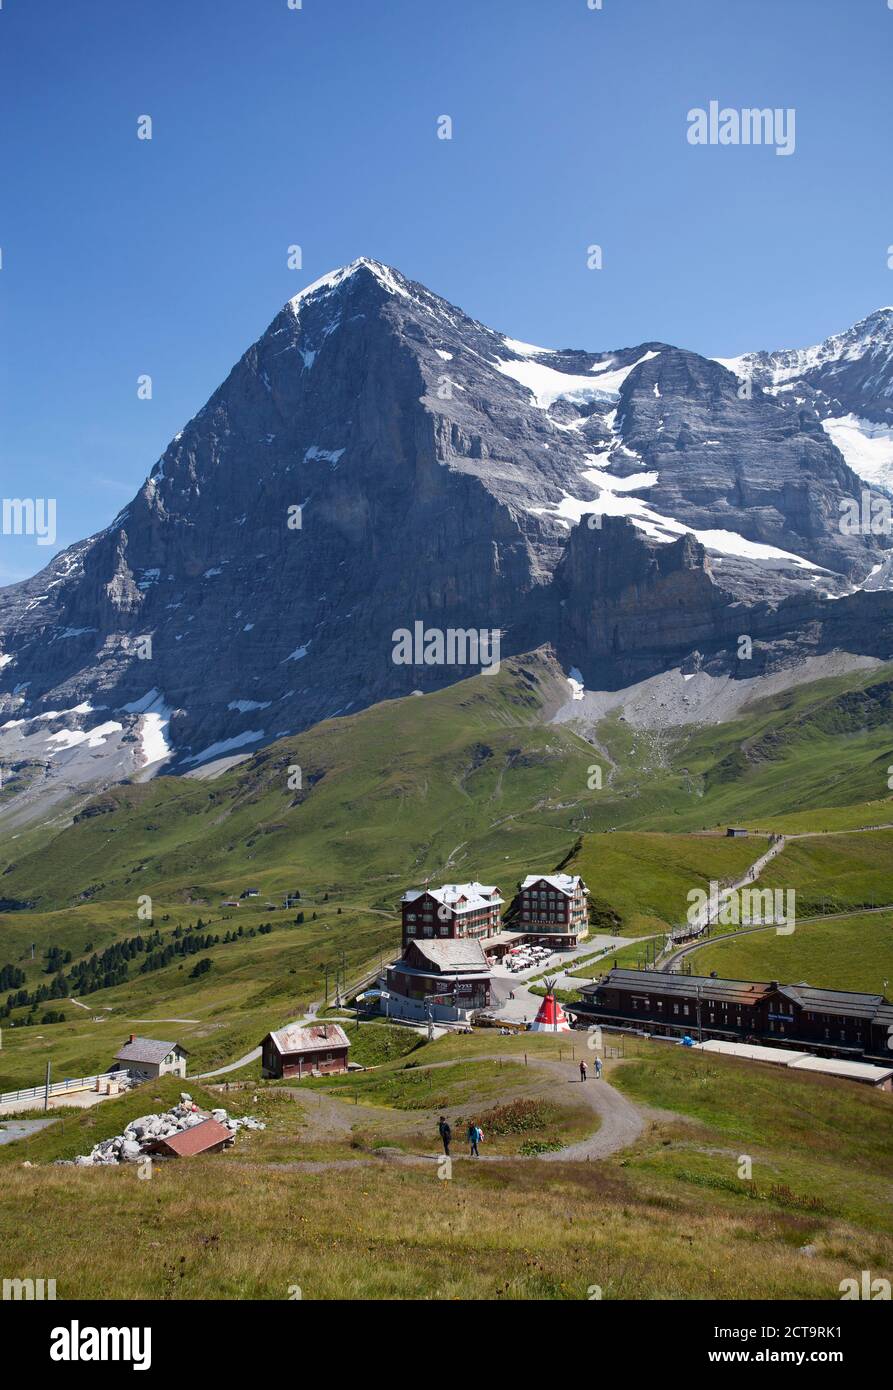 La Svizzera, Oberland bernese, Grindelwald con Eiger mountain, Kleine Scheidegg, ferrovia della Jungfrau e hotel Foto Stock